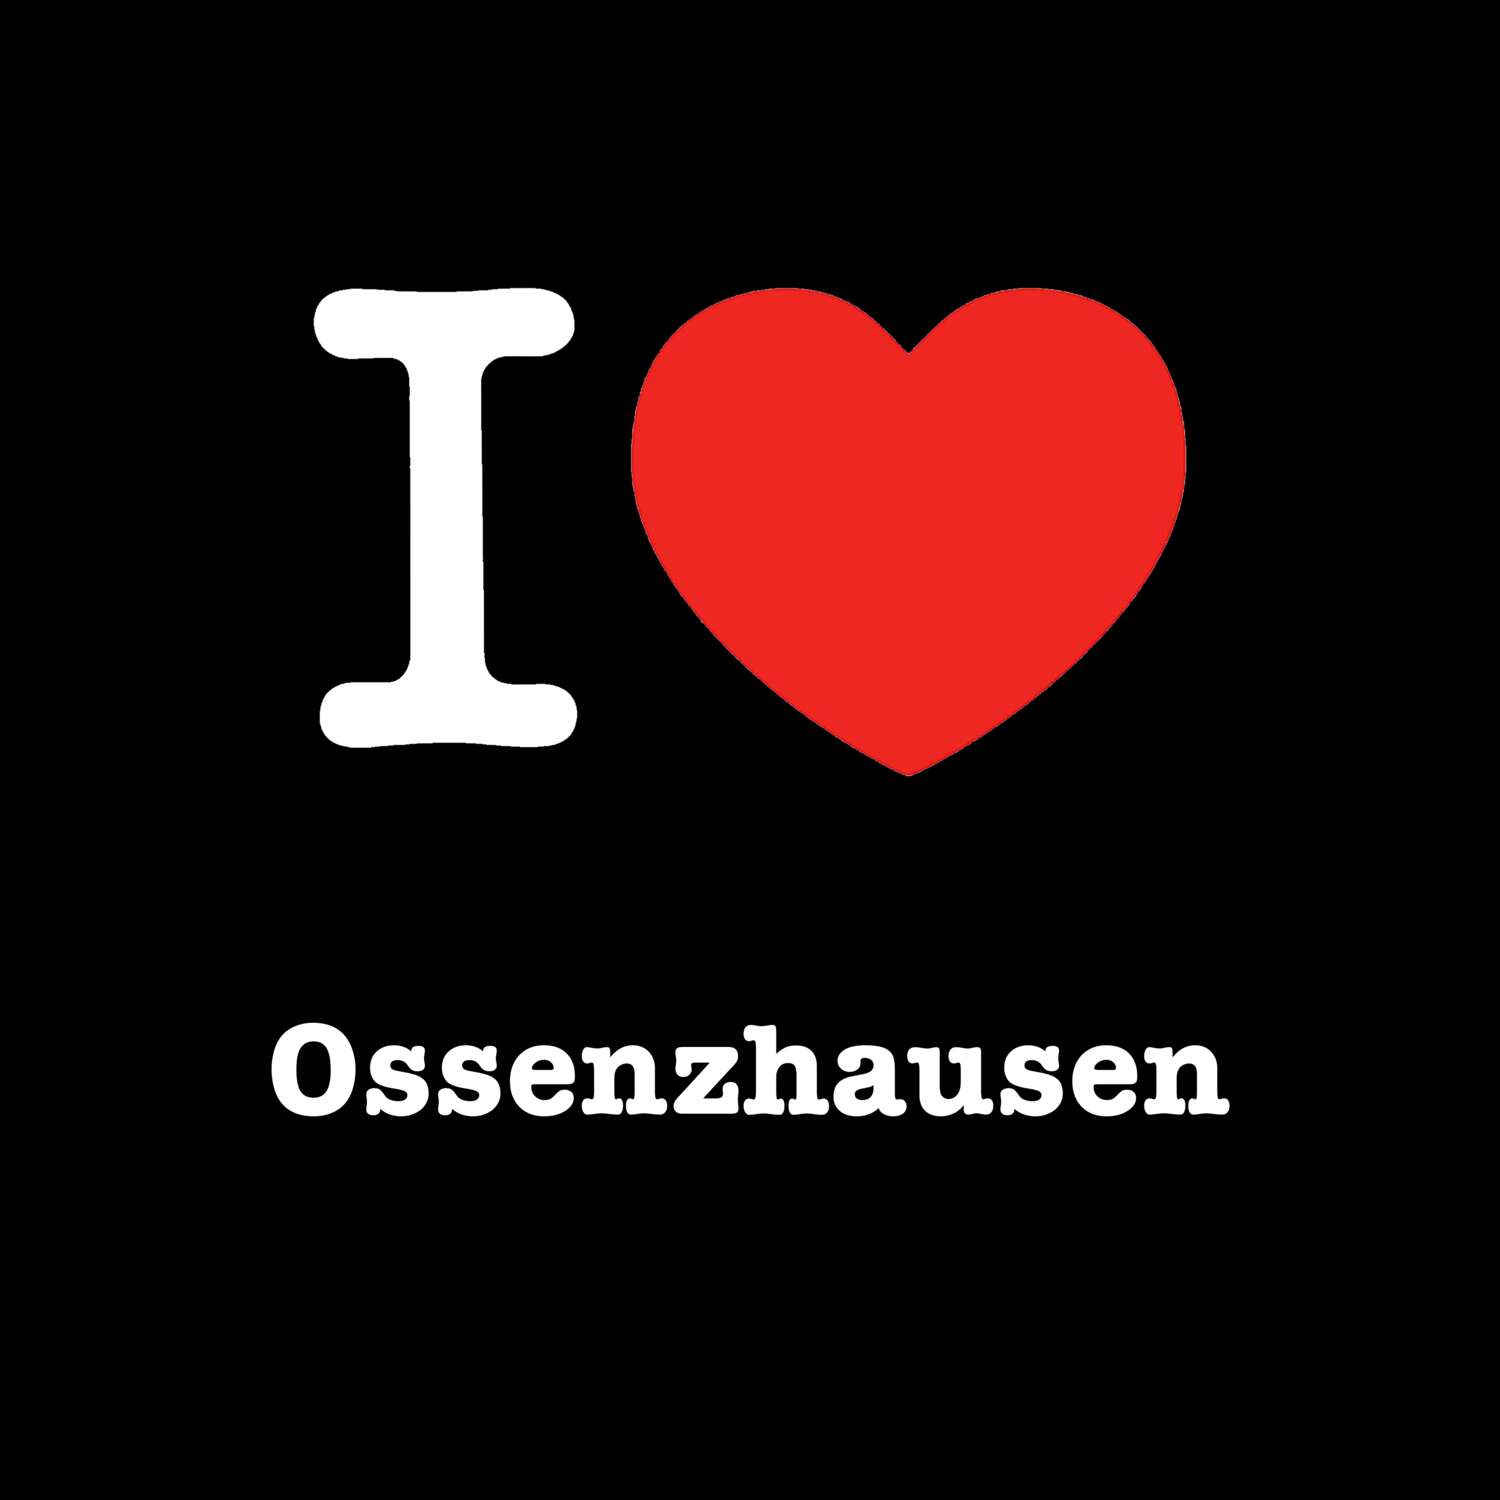 Ossenzhausen T-Shirt »I love«